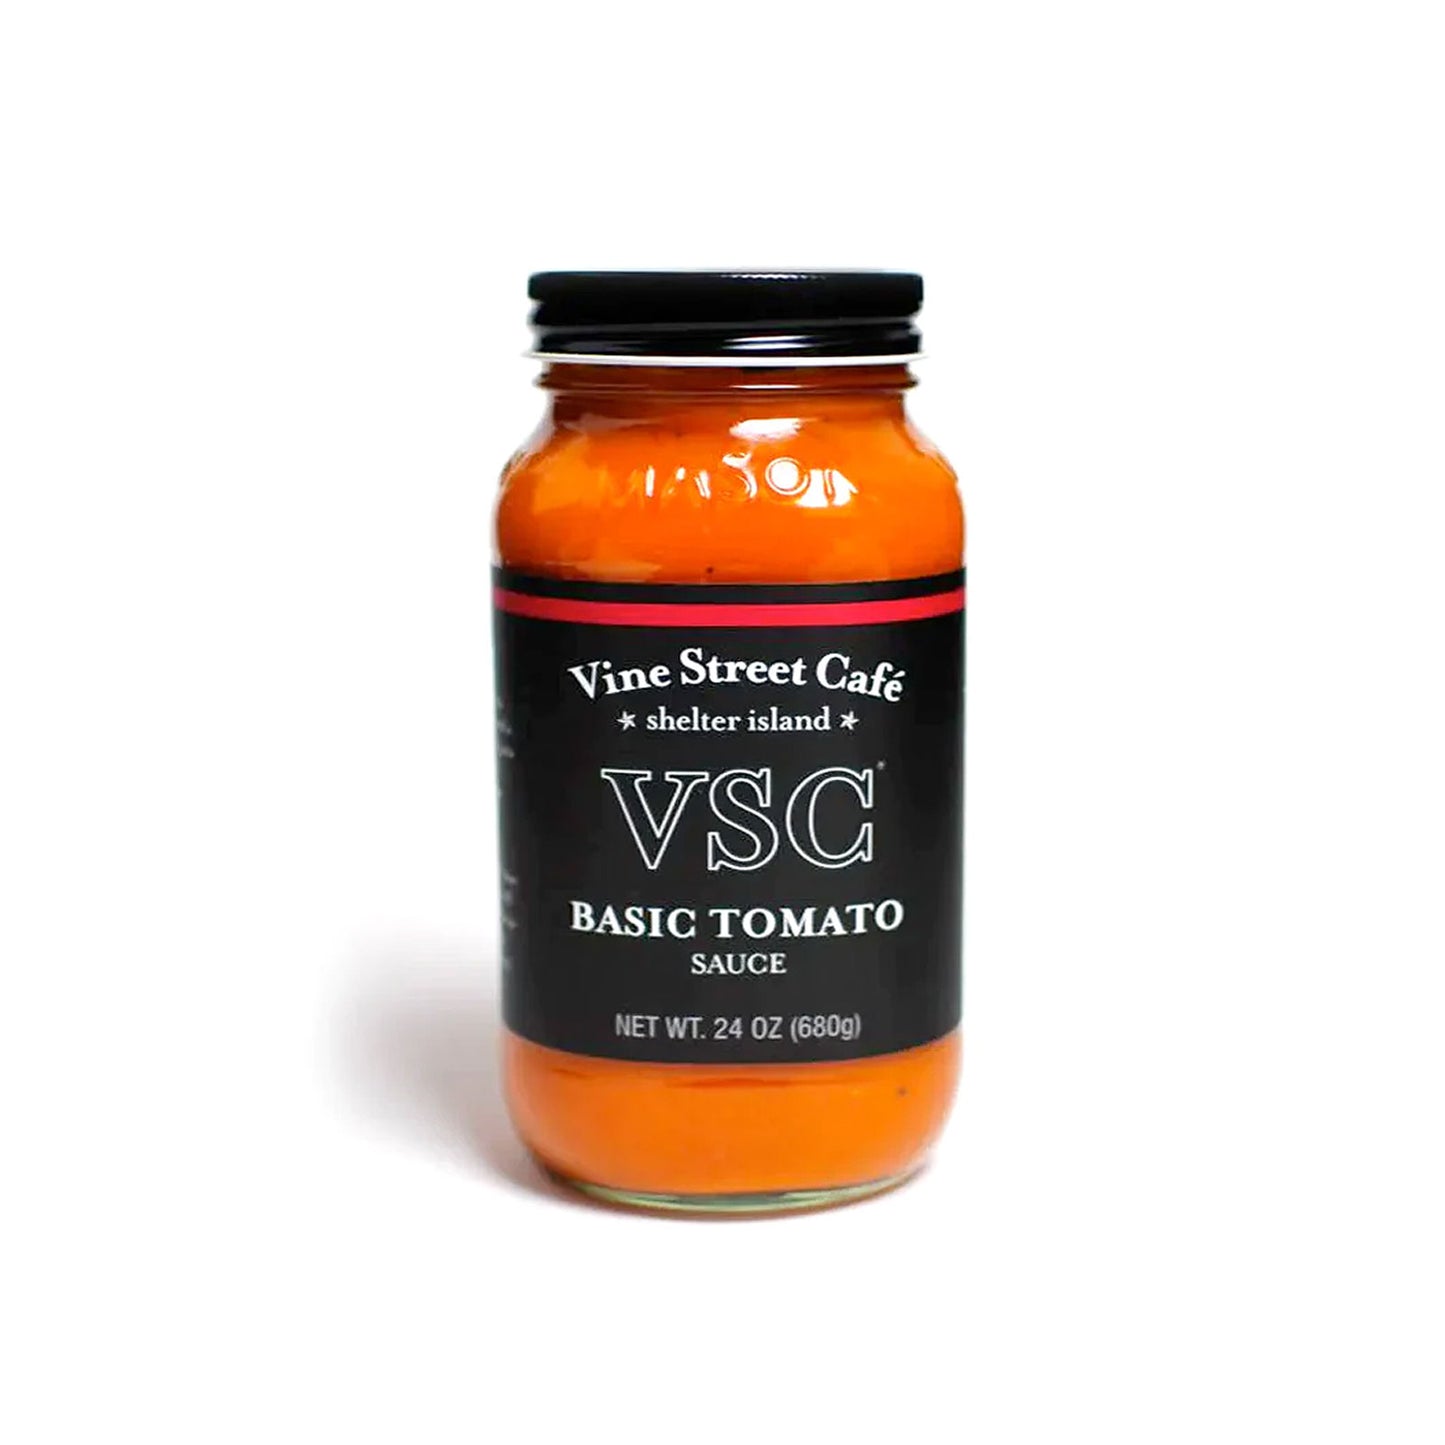 Vine Street Cafe Basic Tomato Sauce